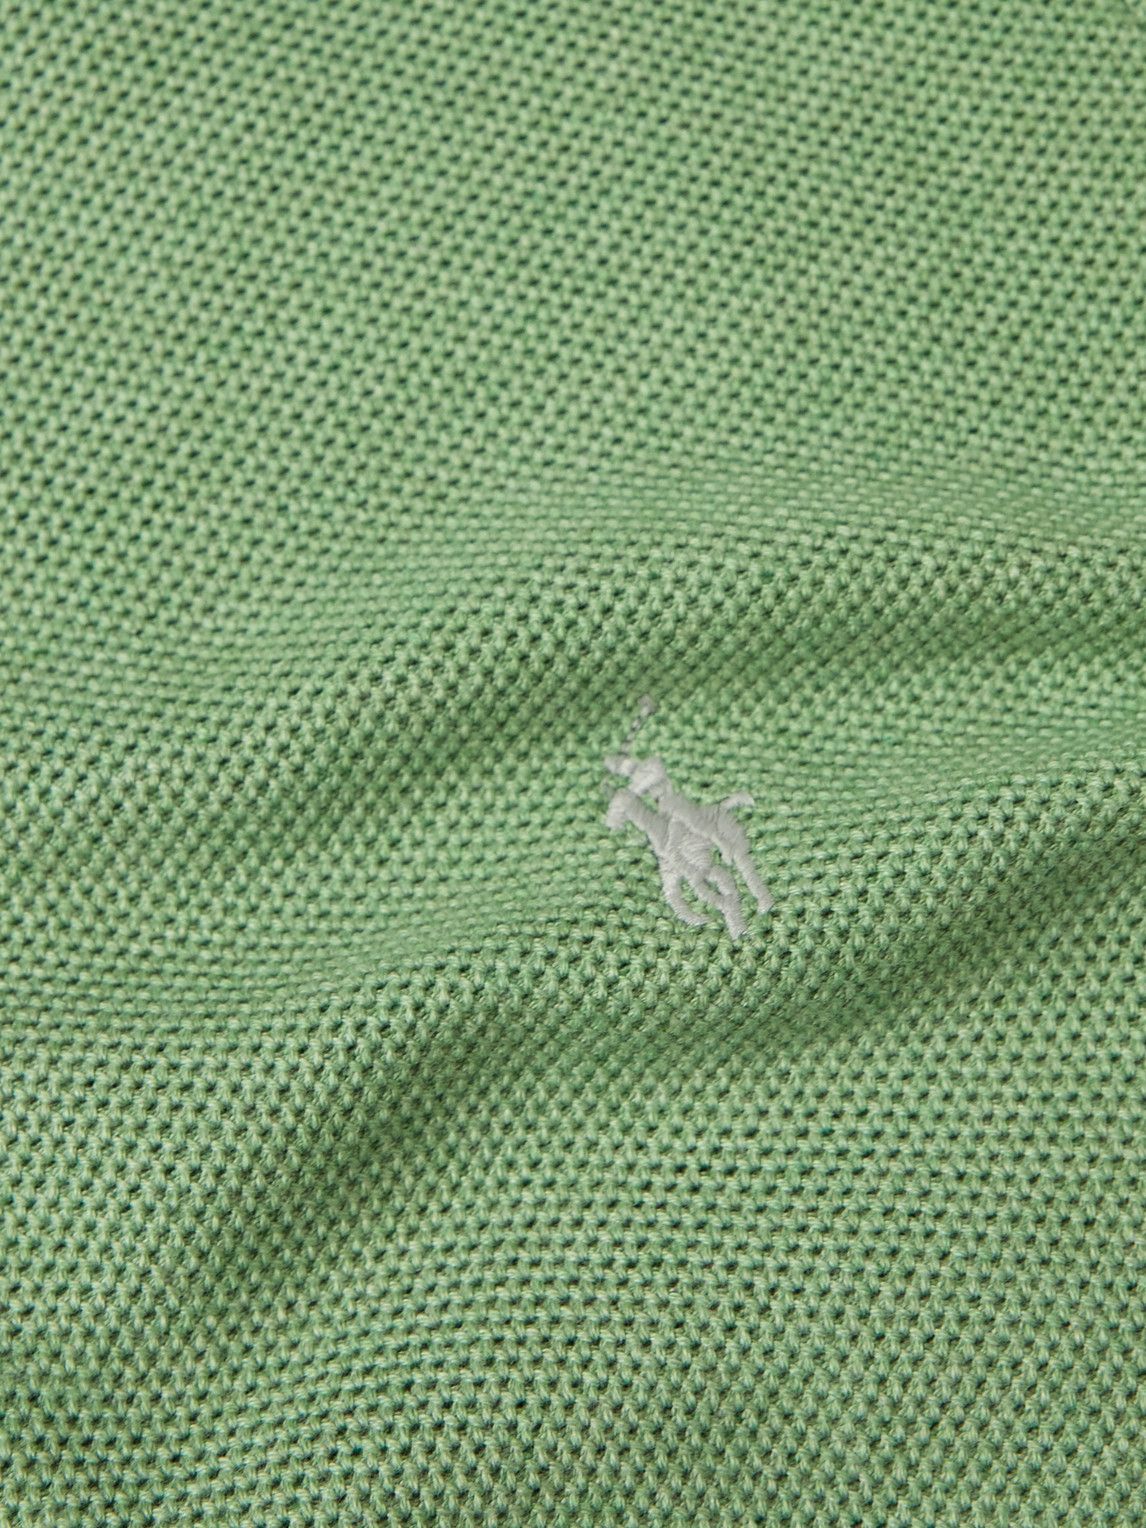 Polo Ralph Lauren - Logo-Embroidered Cotton-Piqué Half-Zip Sweater - Green